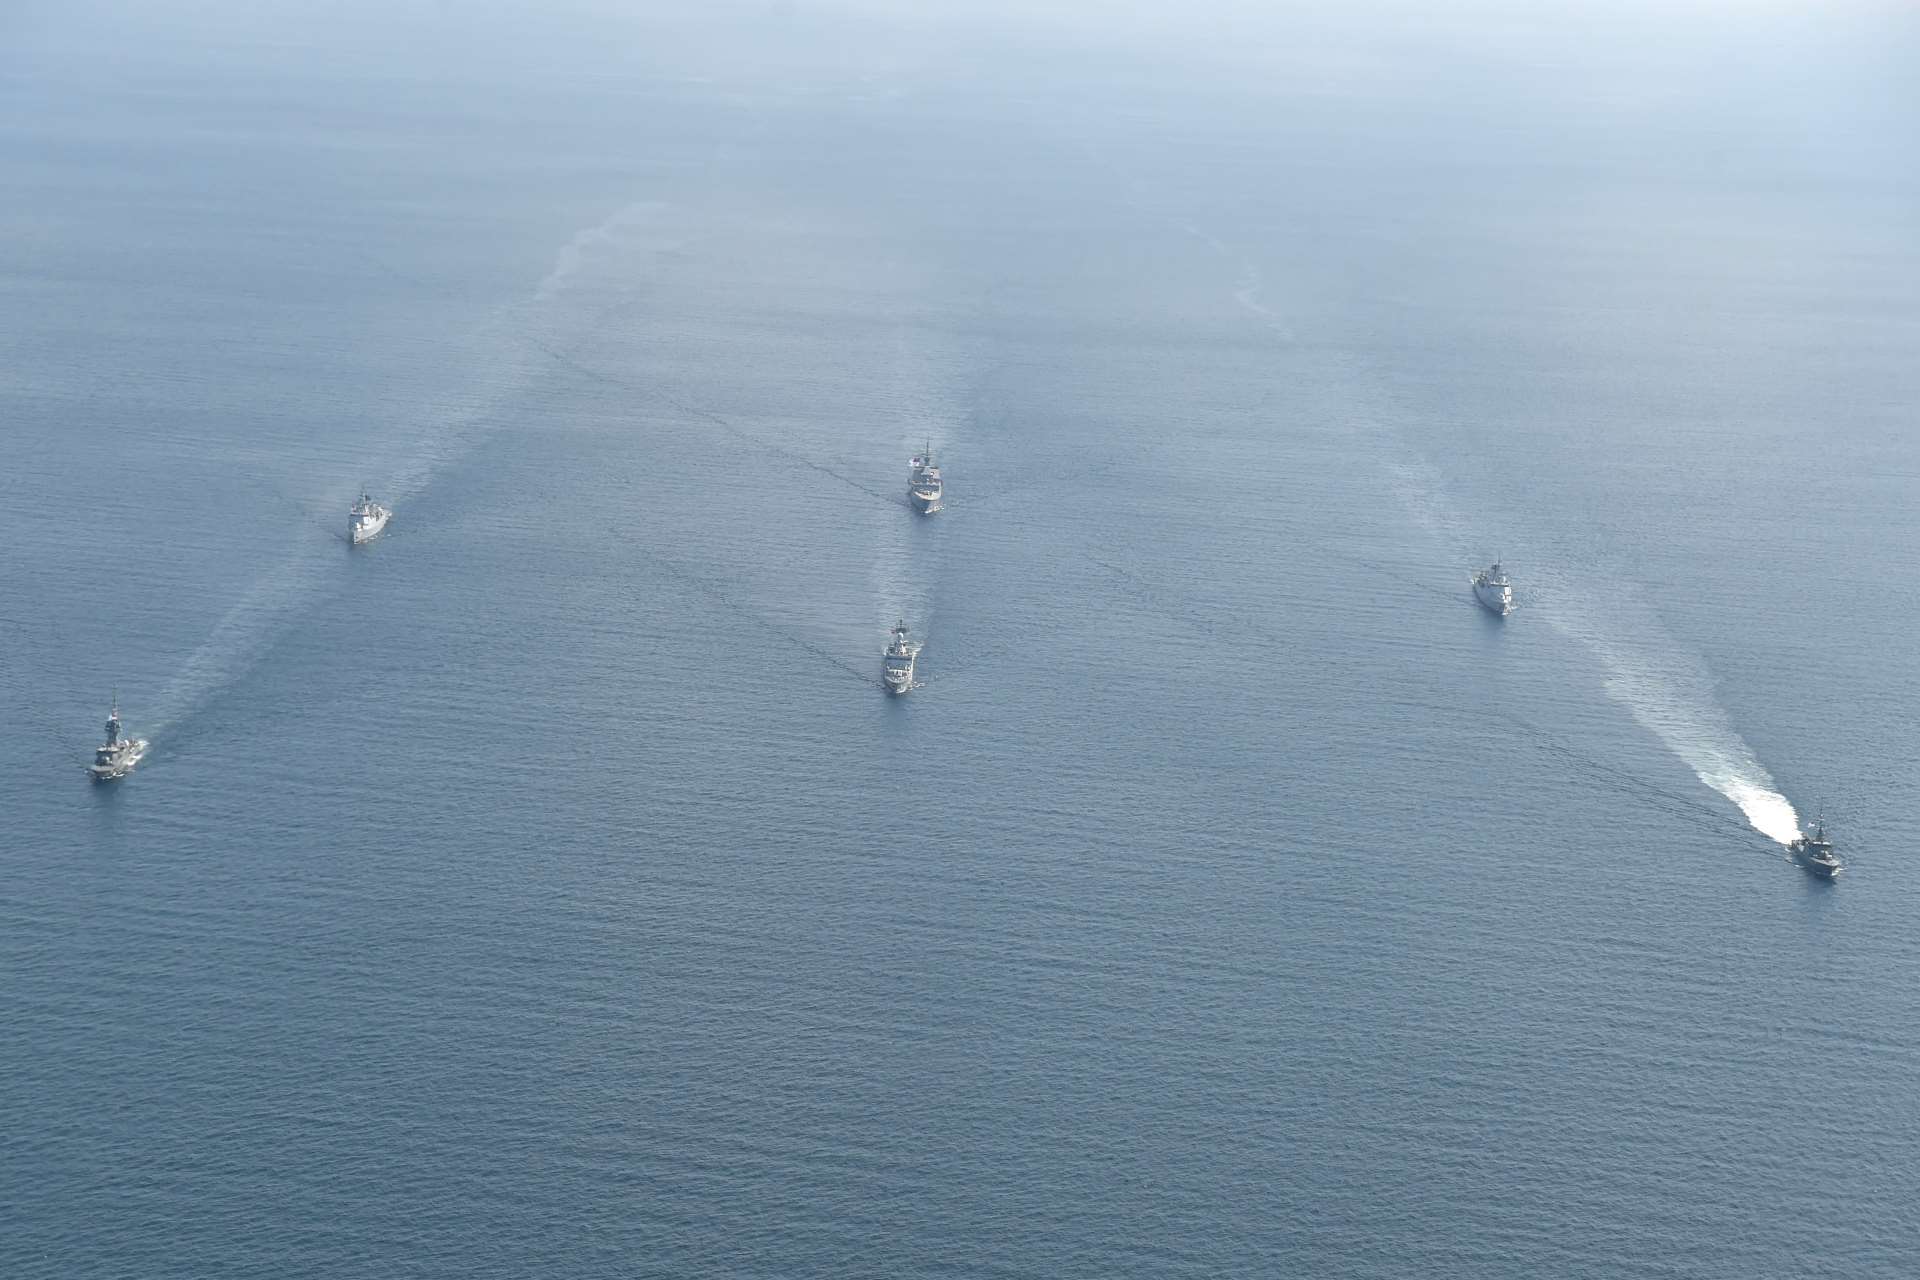 Republic of Singapore Navy (RSN) and Royal Malaysian Navy (RMN) ships sailing in formation as part of Exercise Malapura 2018.